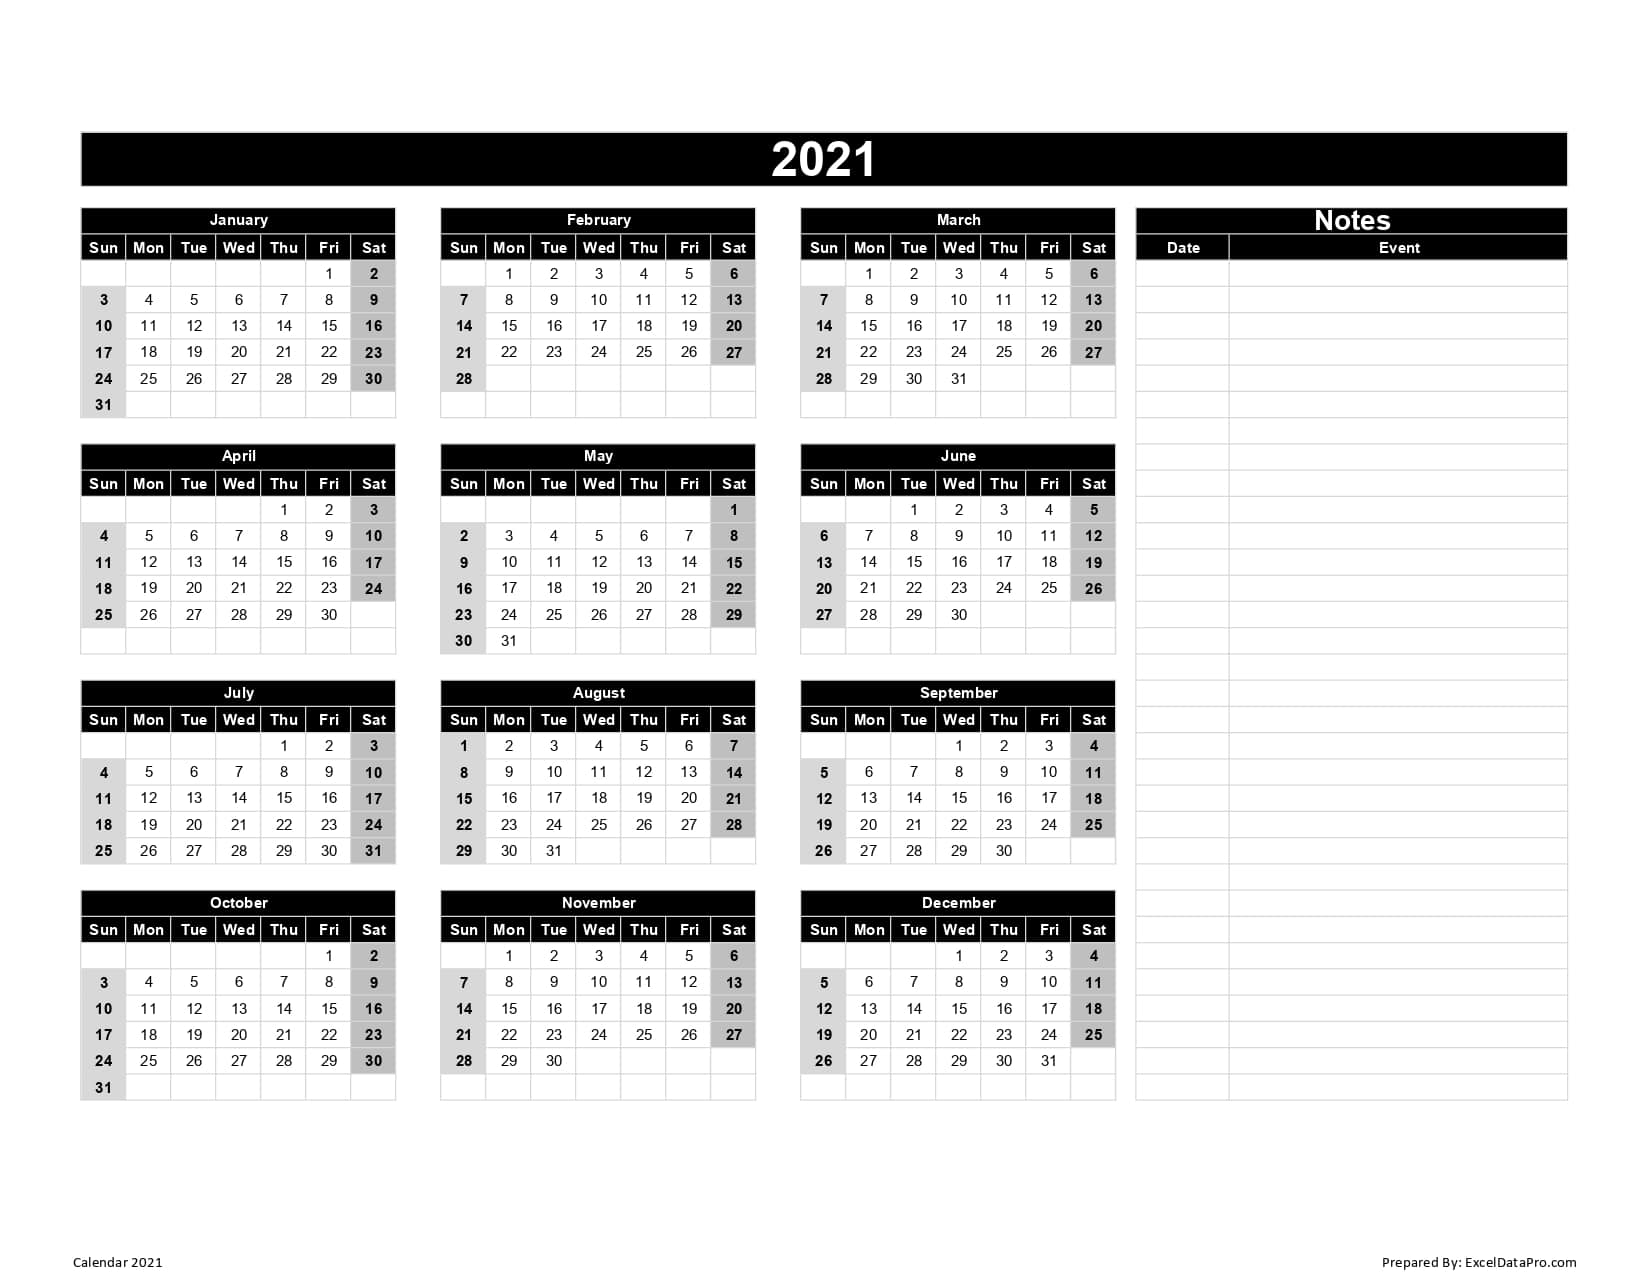 Calendar 2021 Excel Templates, Printable PDFs & Images ...